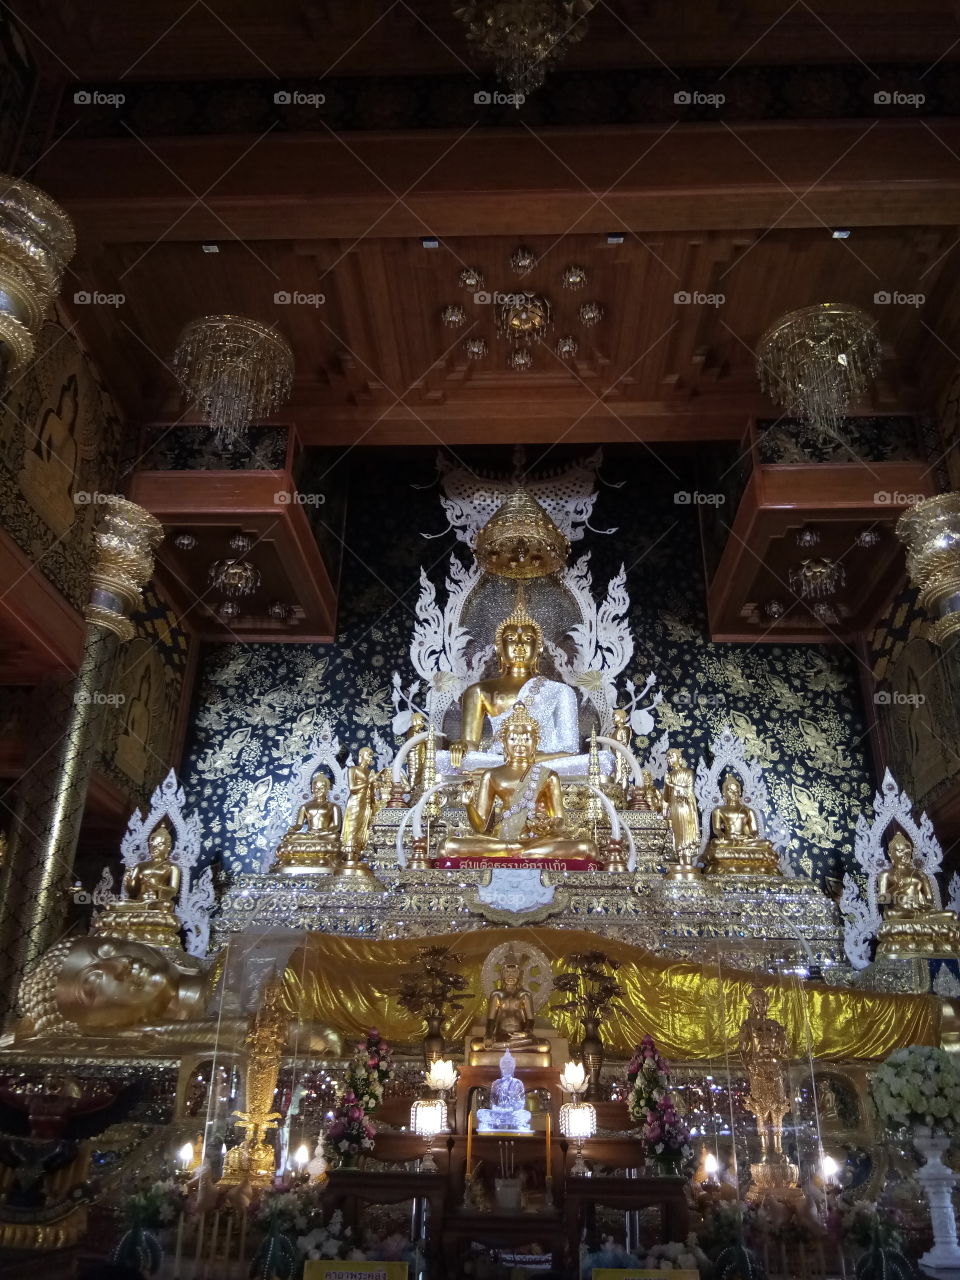 temple
thailand